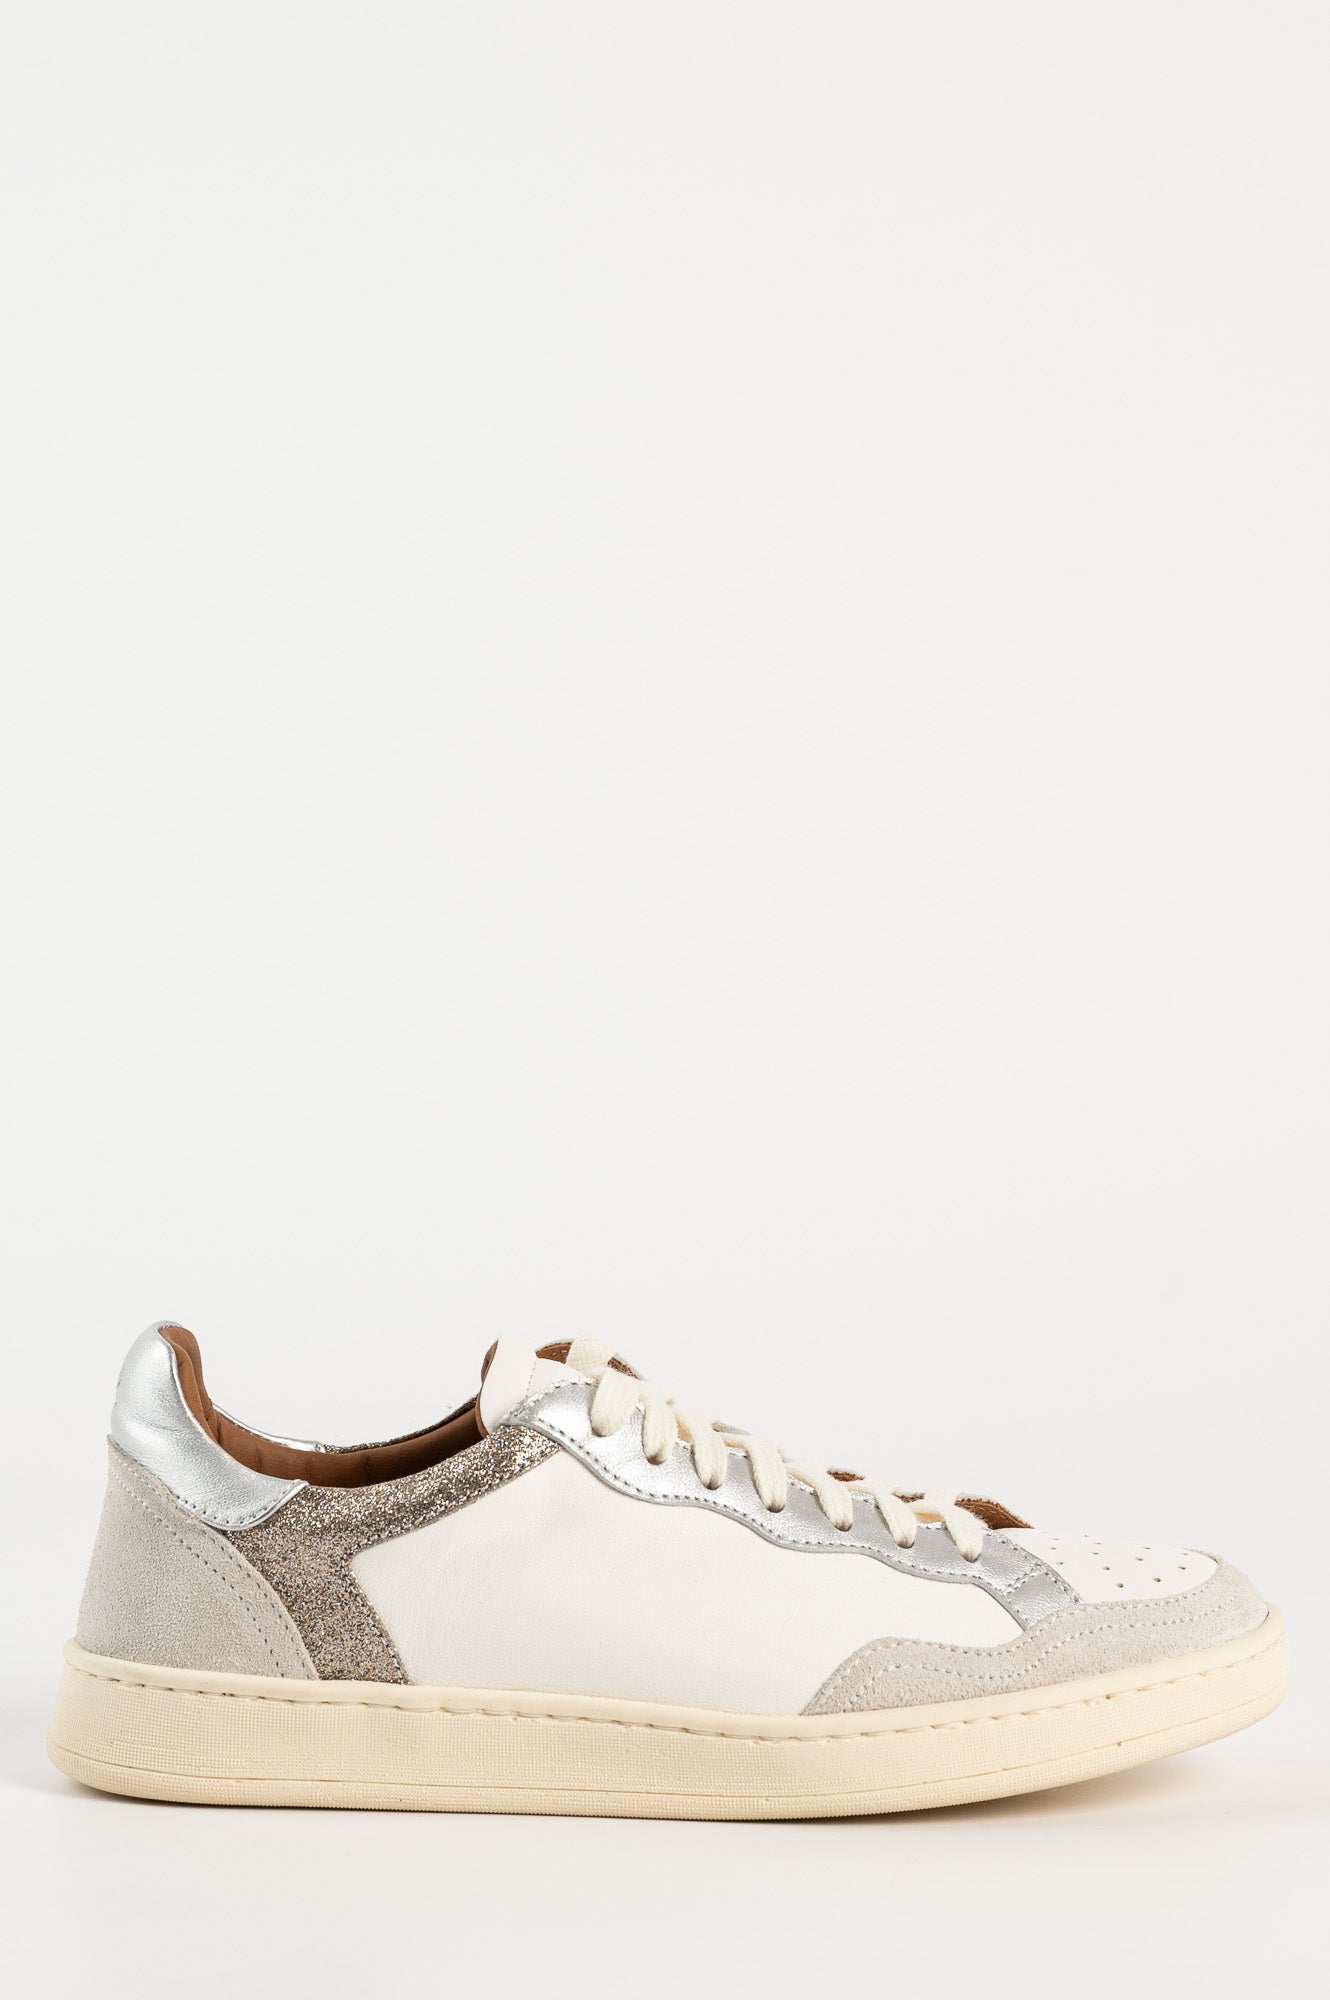 Sneaker Chiara 300 | White Silver Leather